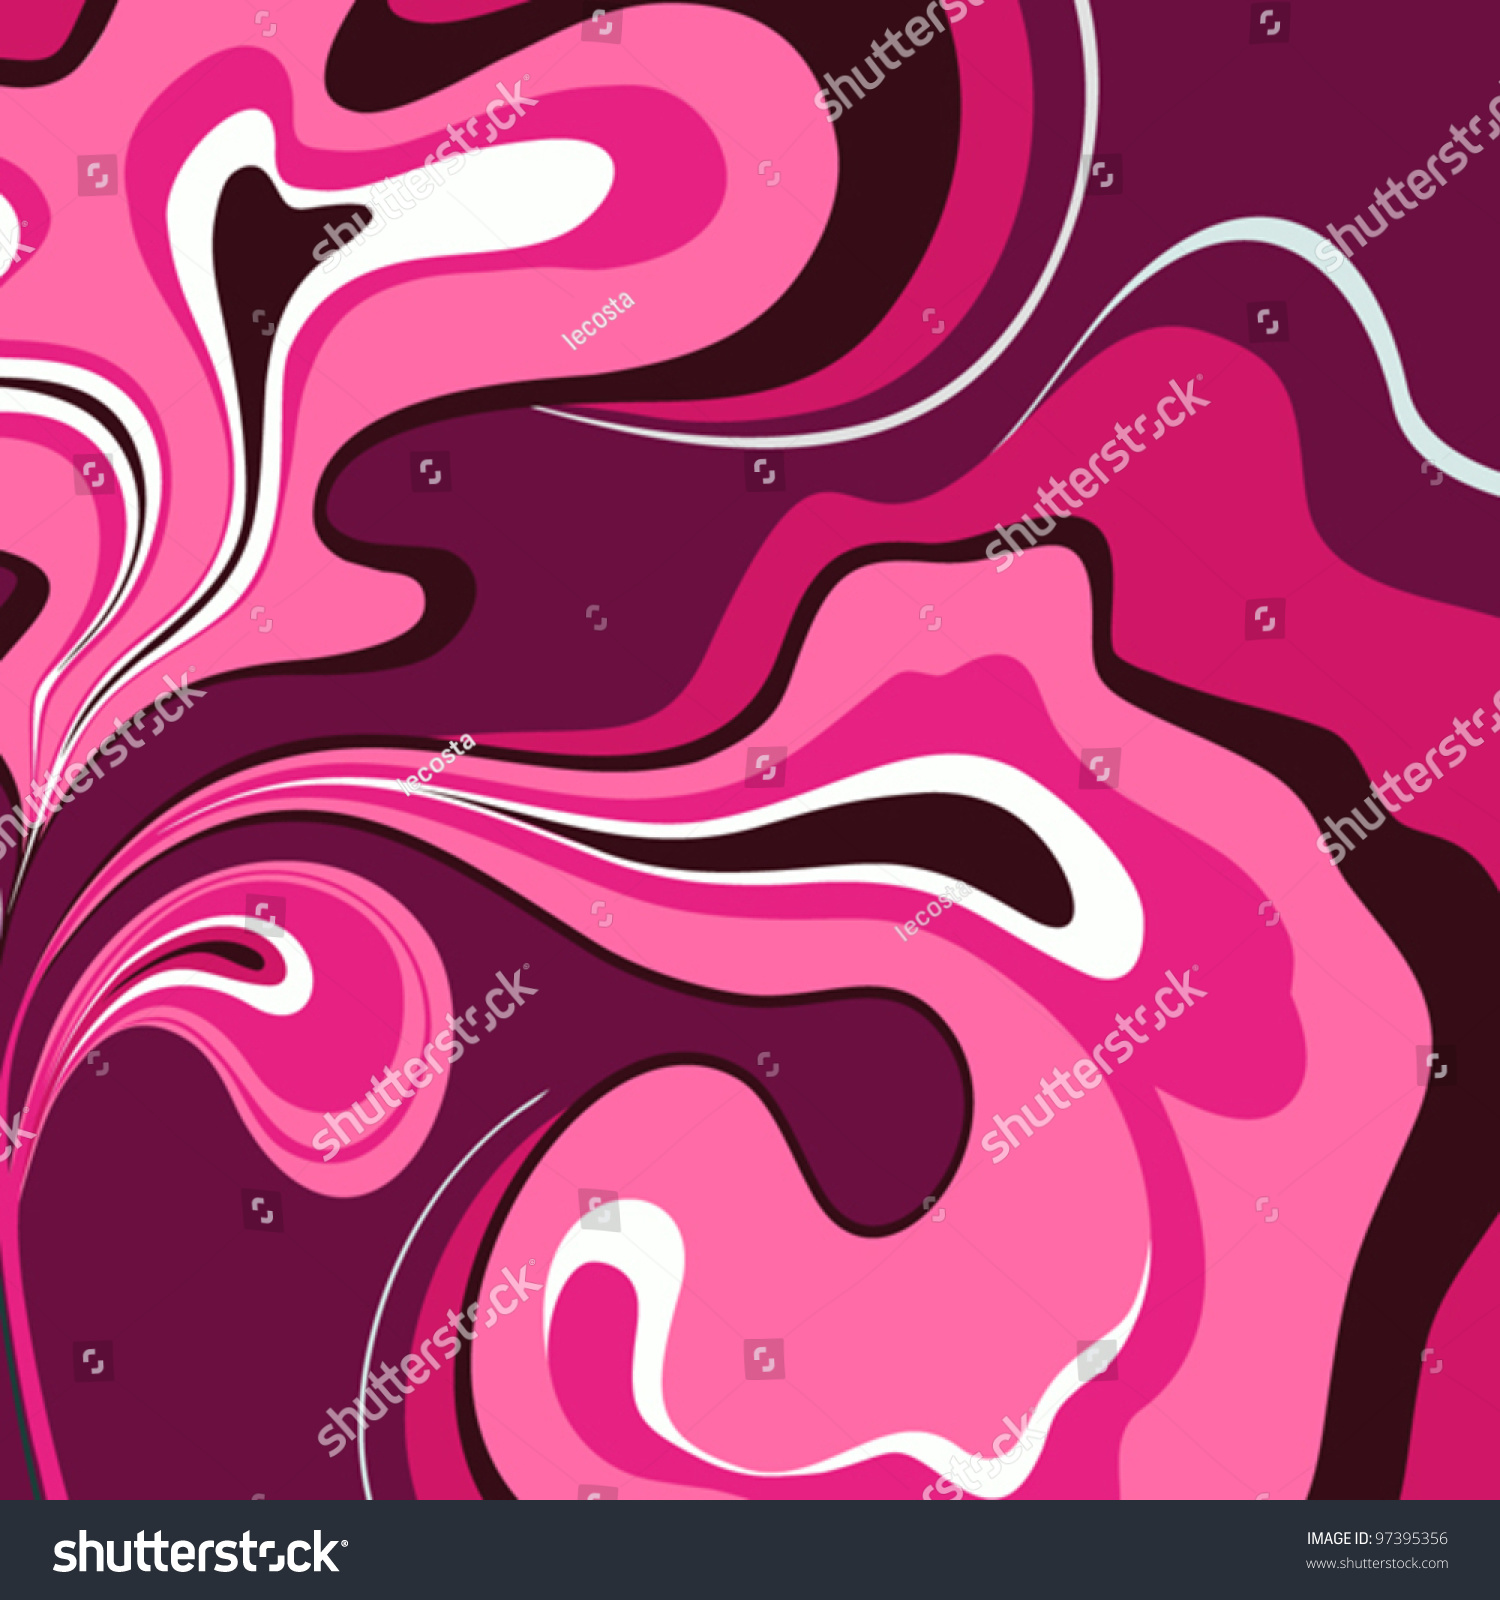 Abstract Background. Vector Art Illustration. - 97395356 : Shutterstock